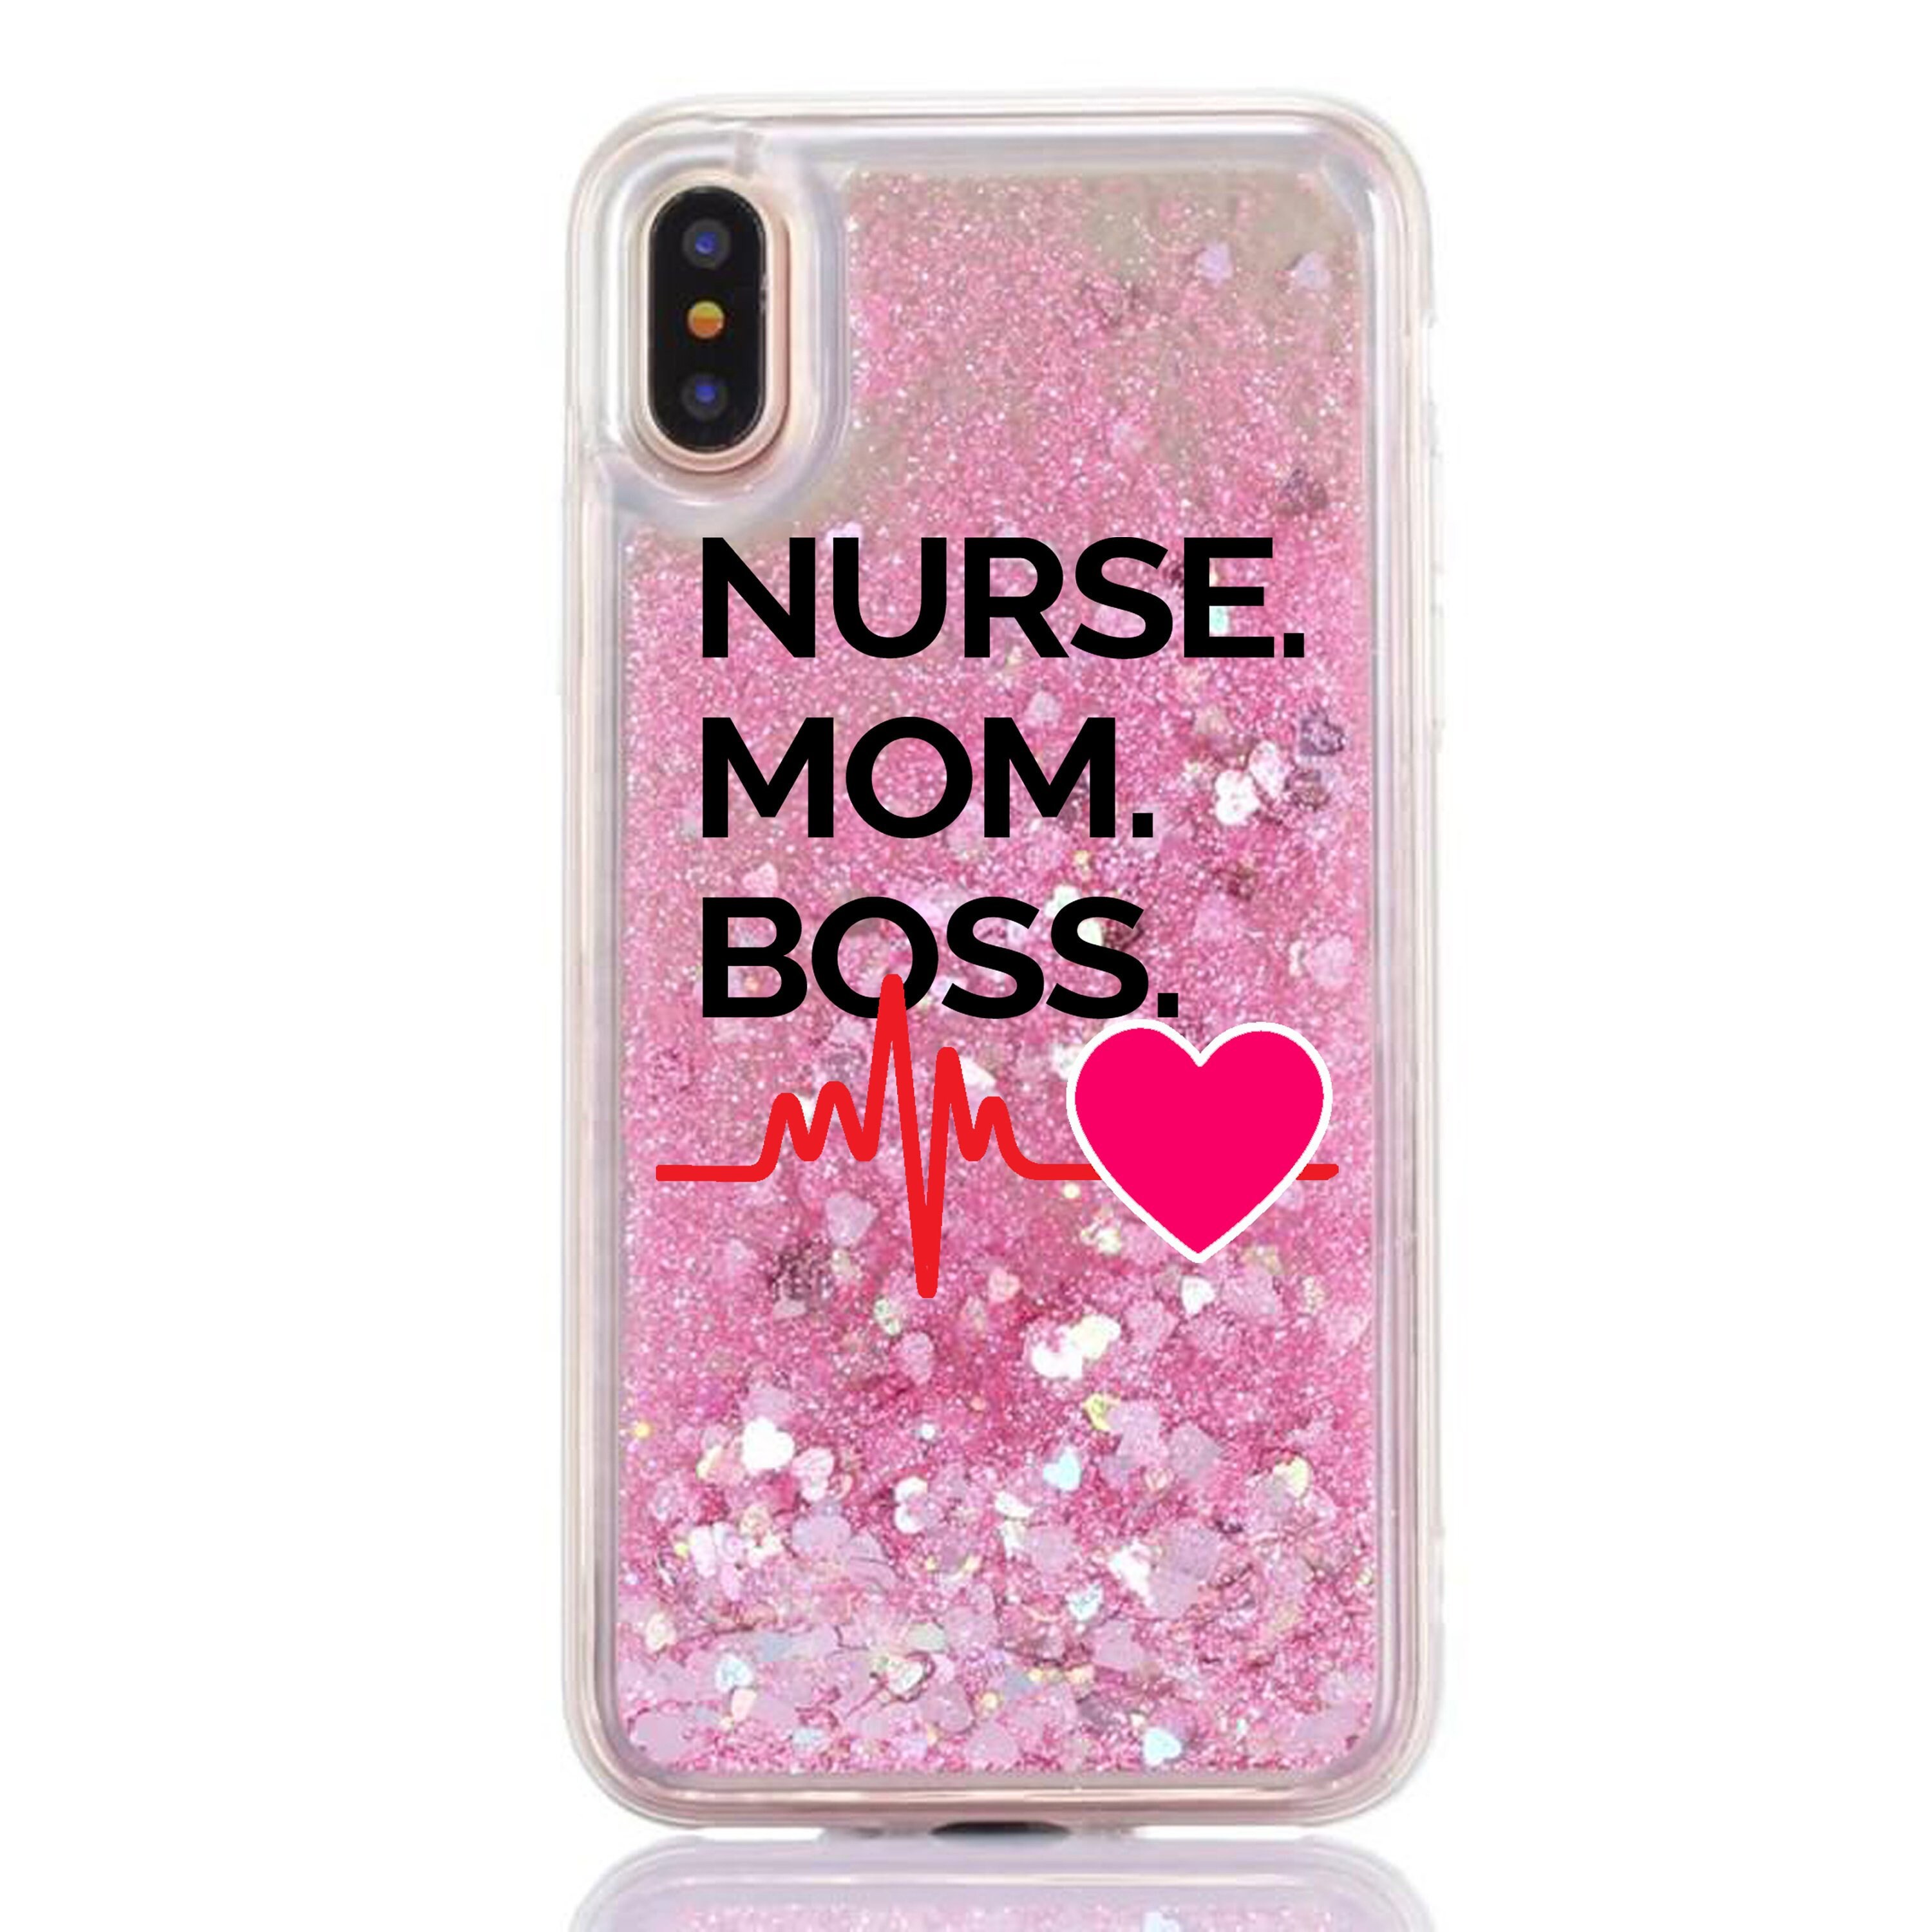 Nurse Mom Boss.Nurse Phone case.Nursing.iPhone XR.iPhone XS MAX iPhone 11 case.iPhone 12 case.iPhone 8 Plus iPhone 11 Pro Max iPhone Se 2020